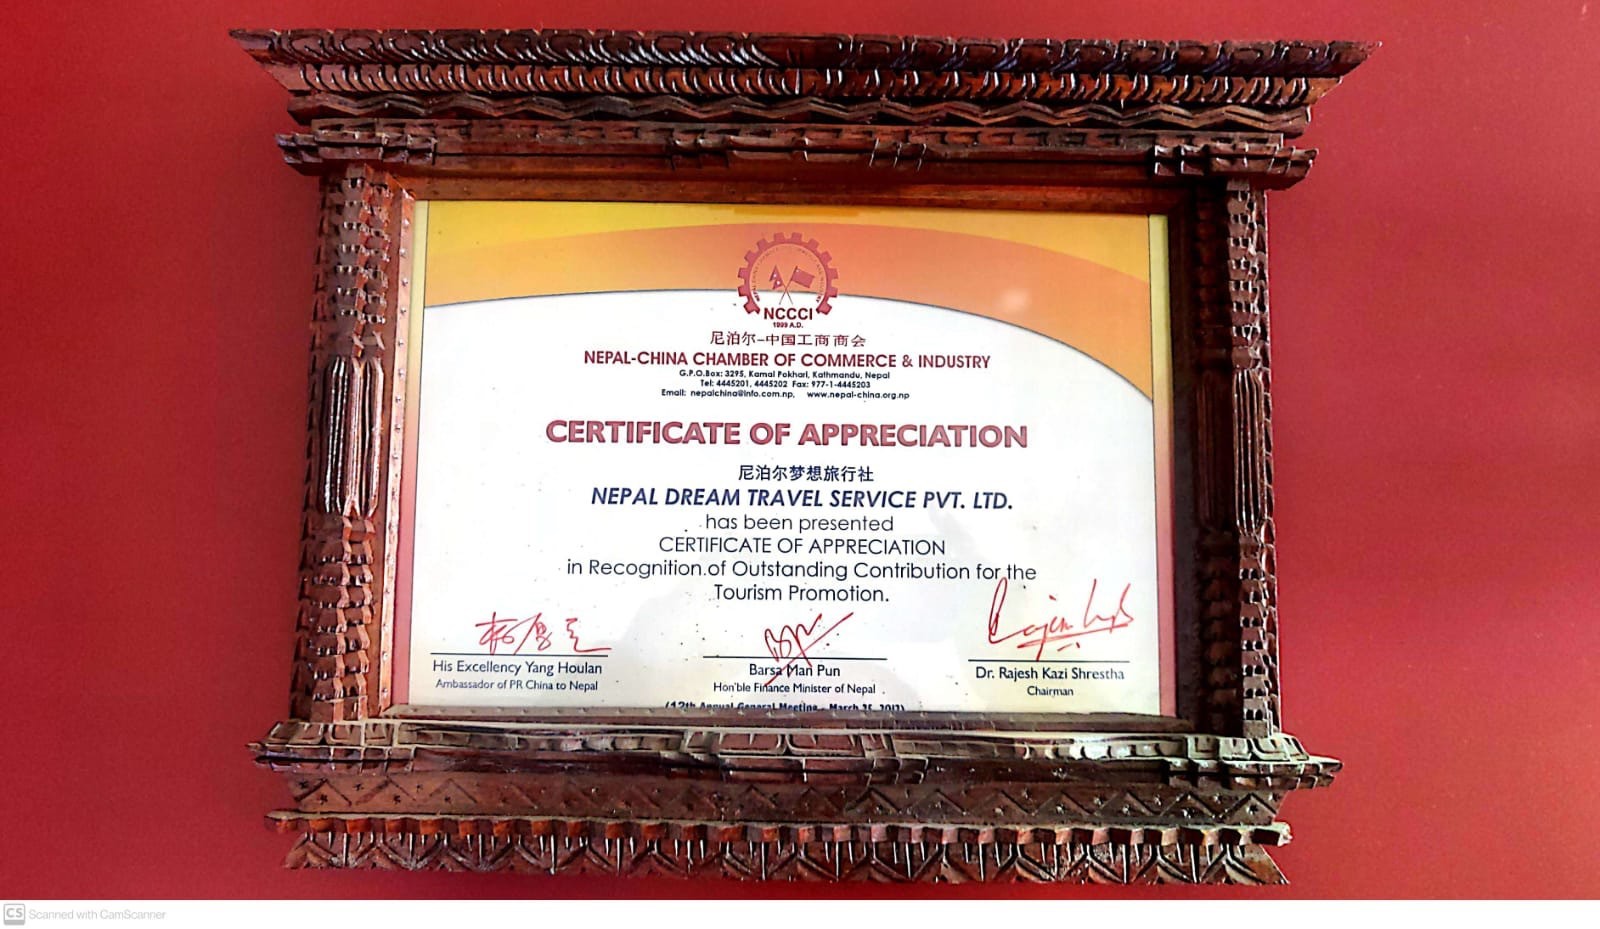 Certificate of Appreciation 2